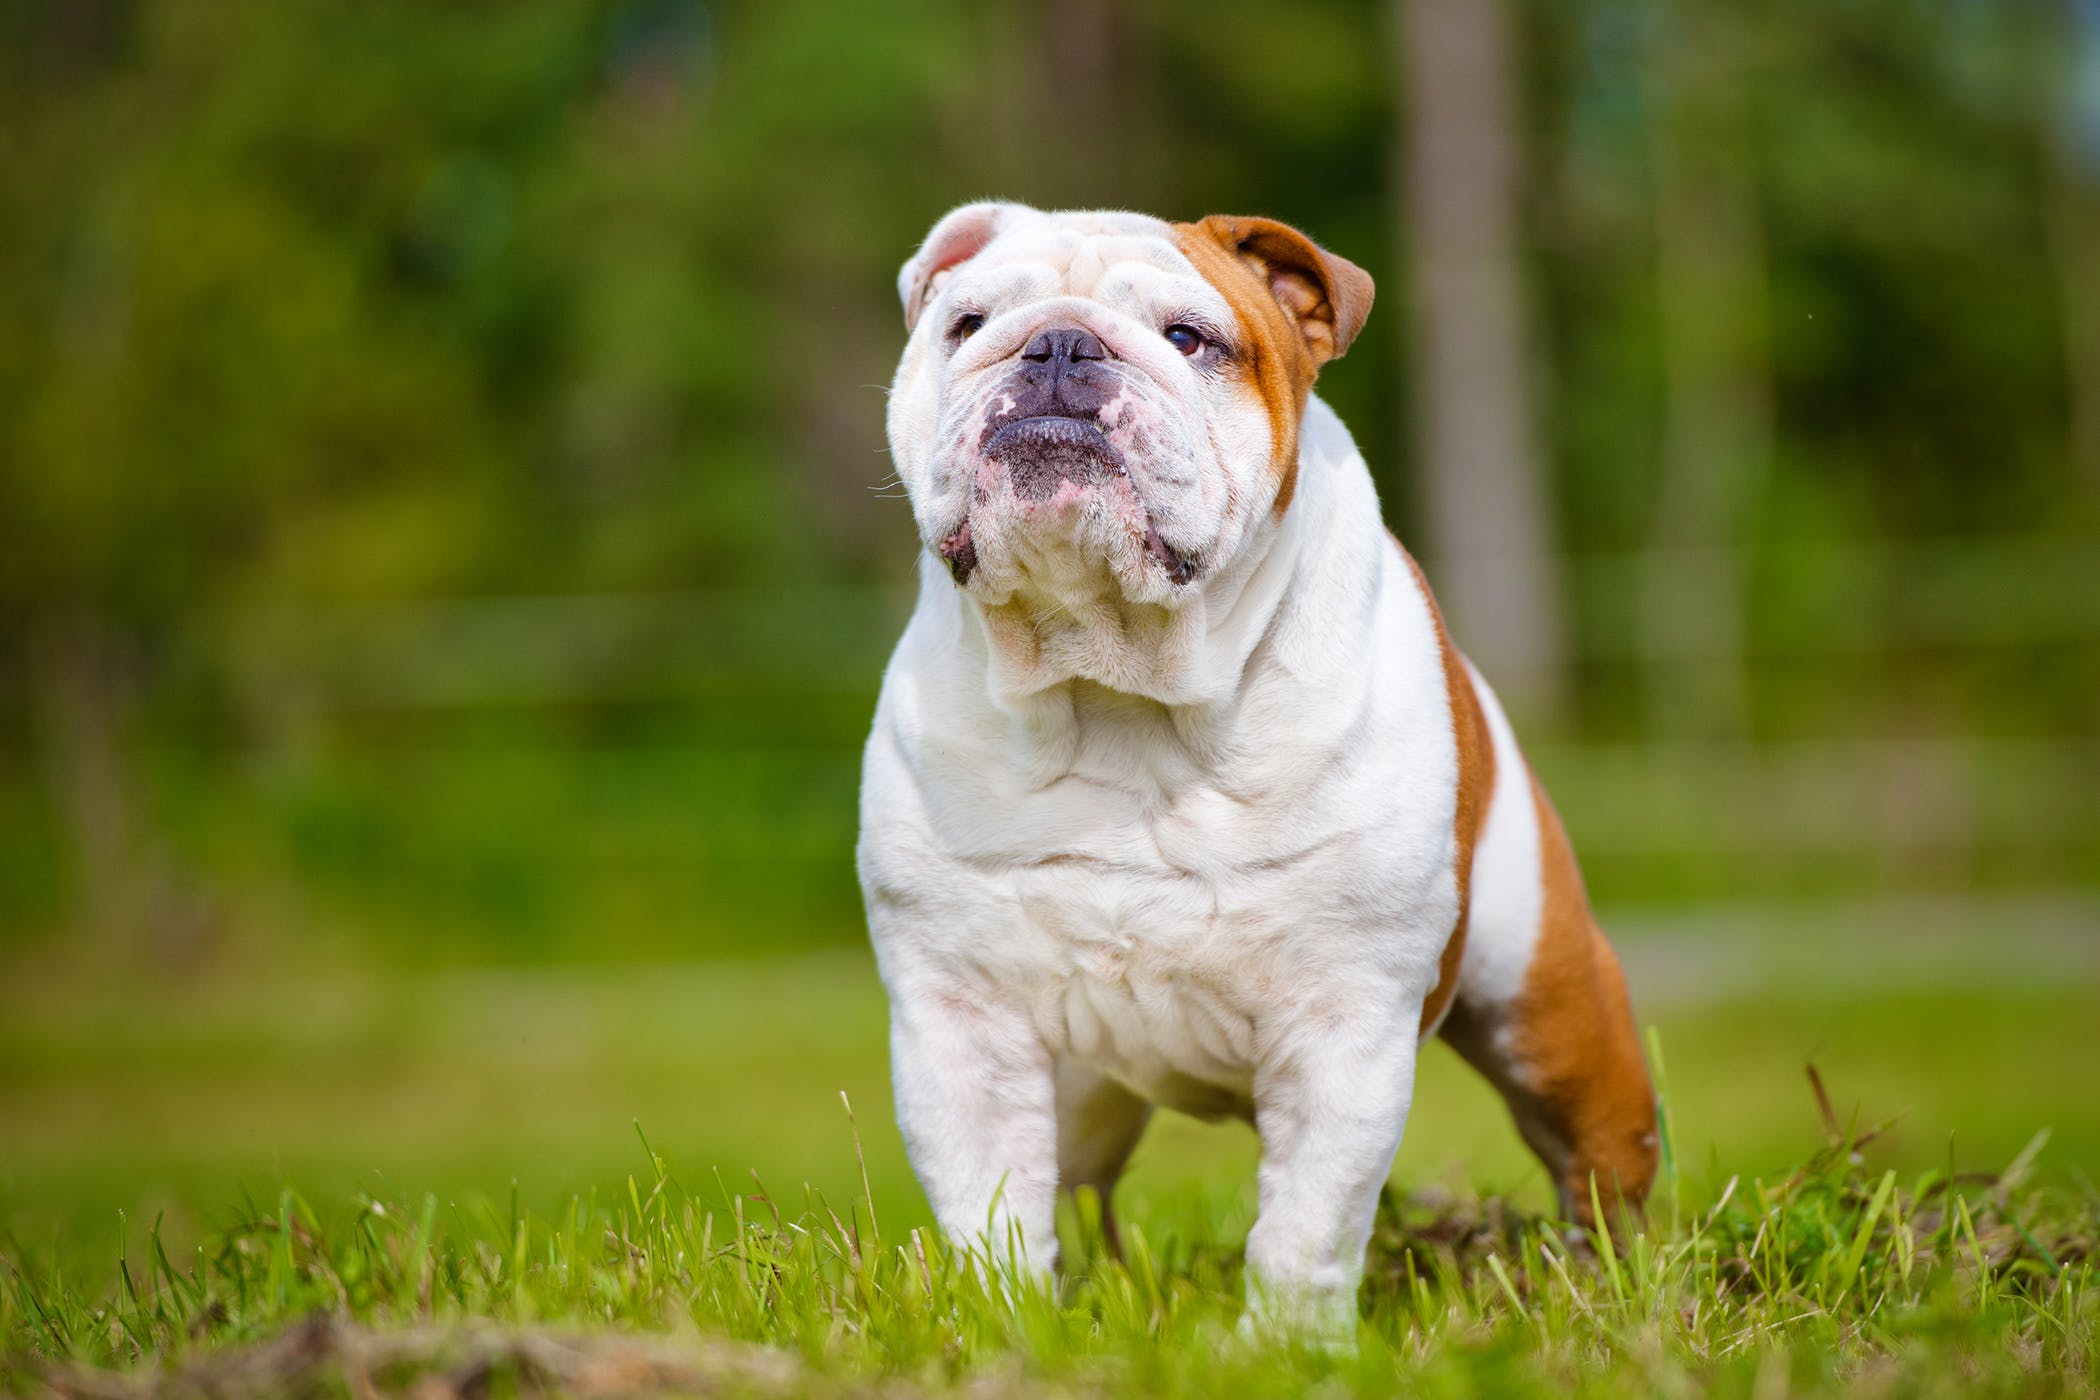 bulldog standing on grass